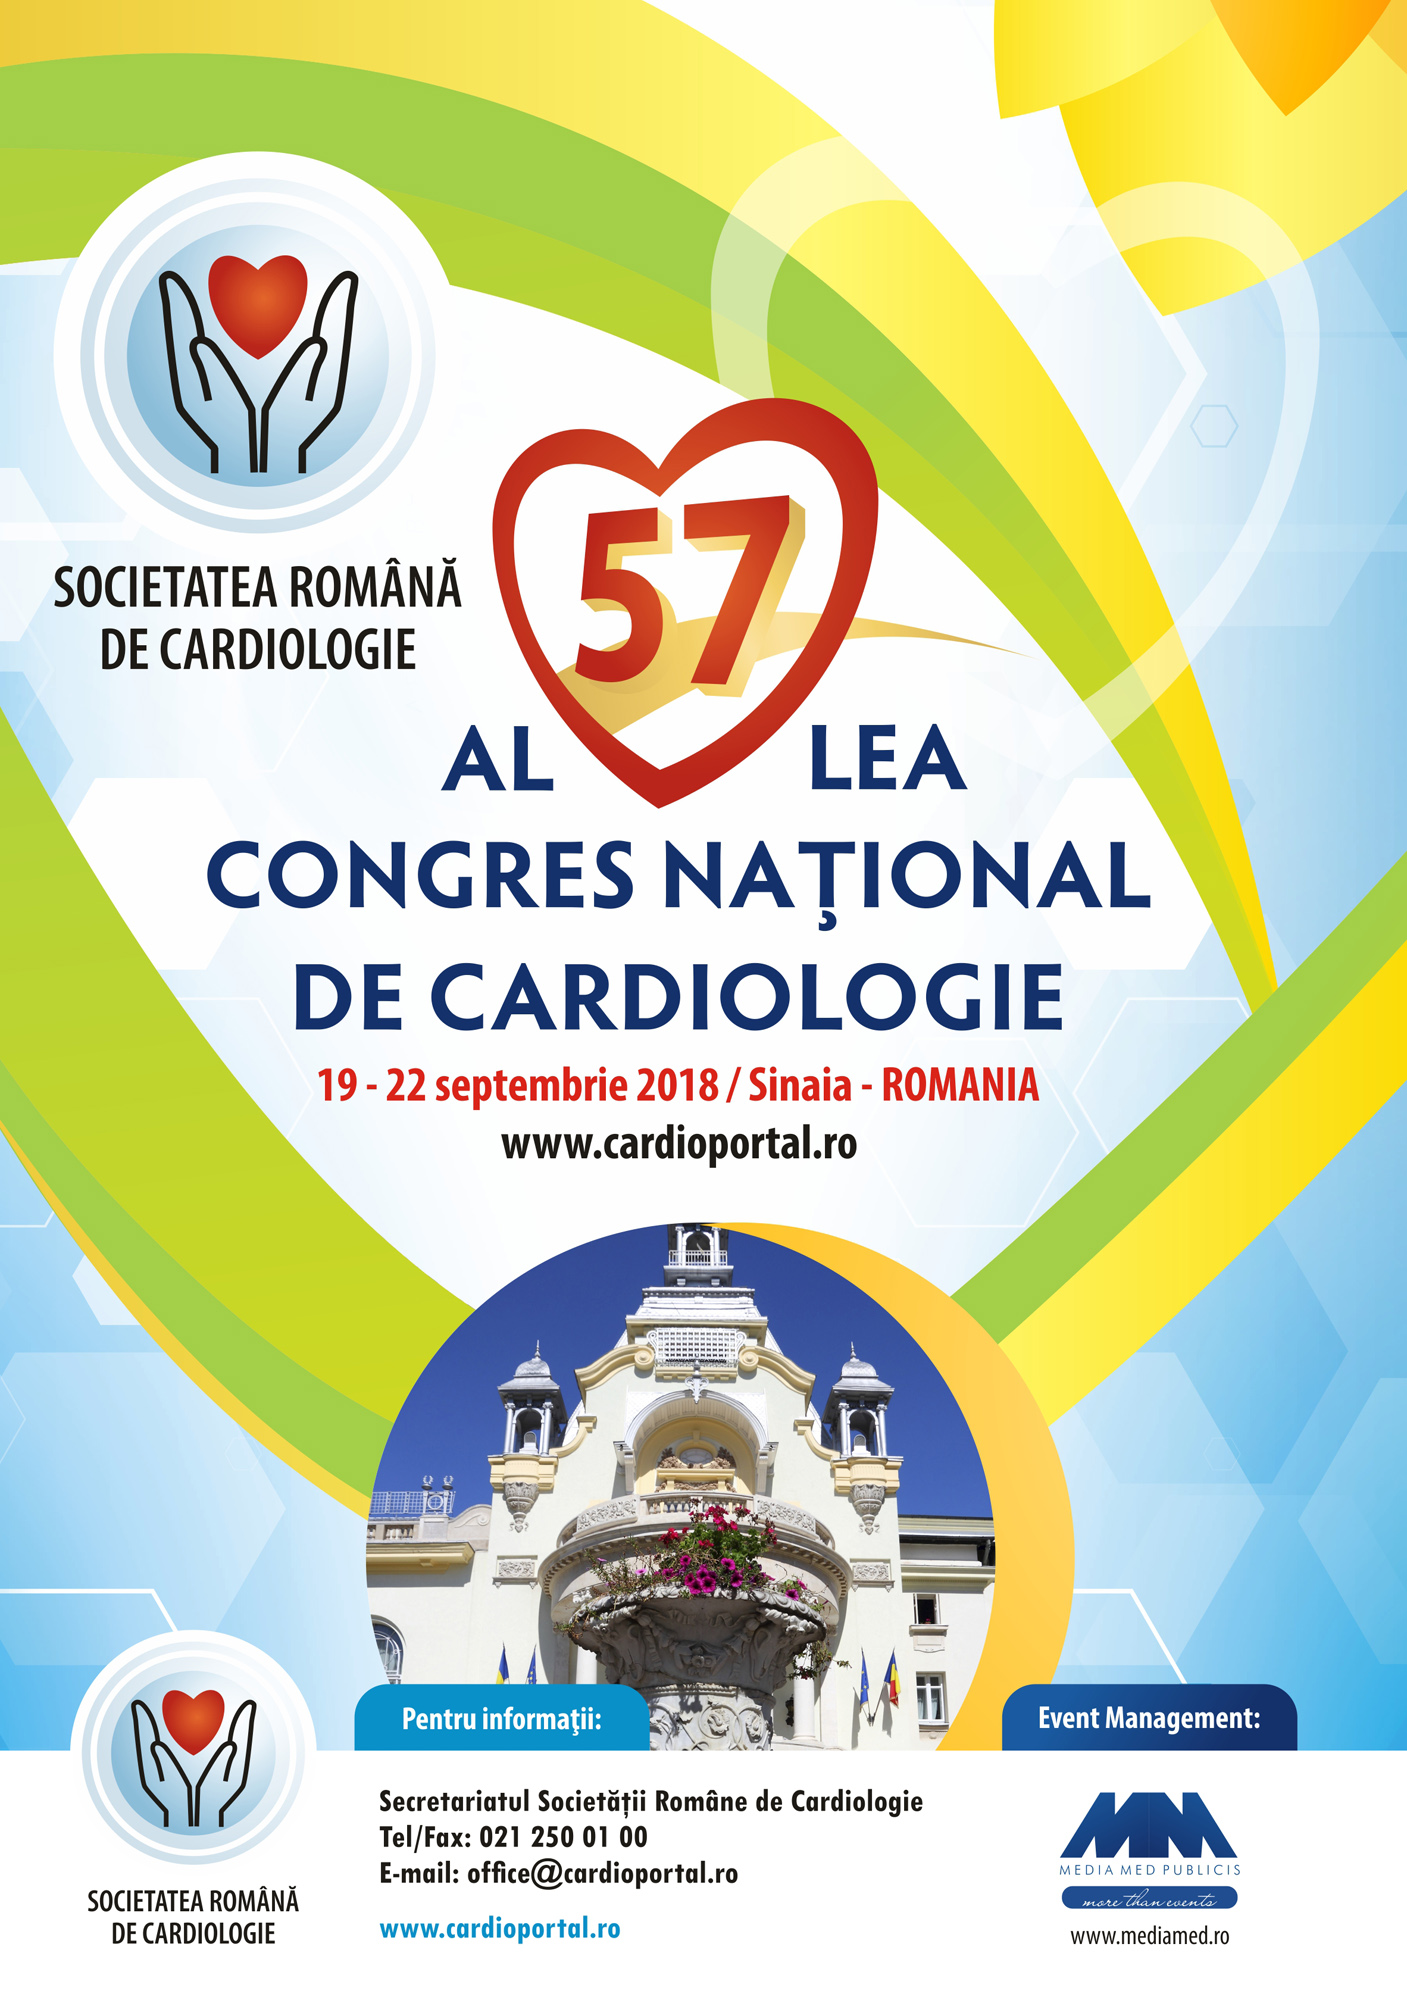 CONGRESUL NATIONAL DE CARDIOLOGIE 19-22 SEPTEMBRIE 2018